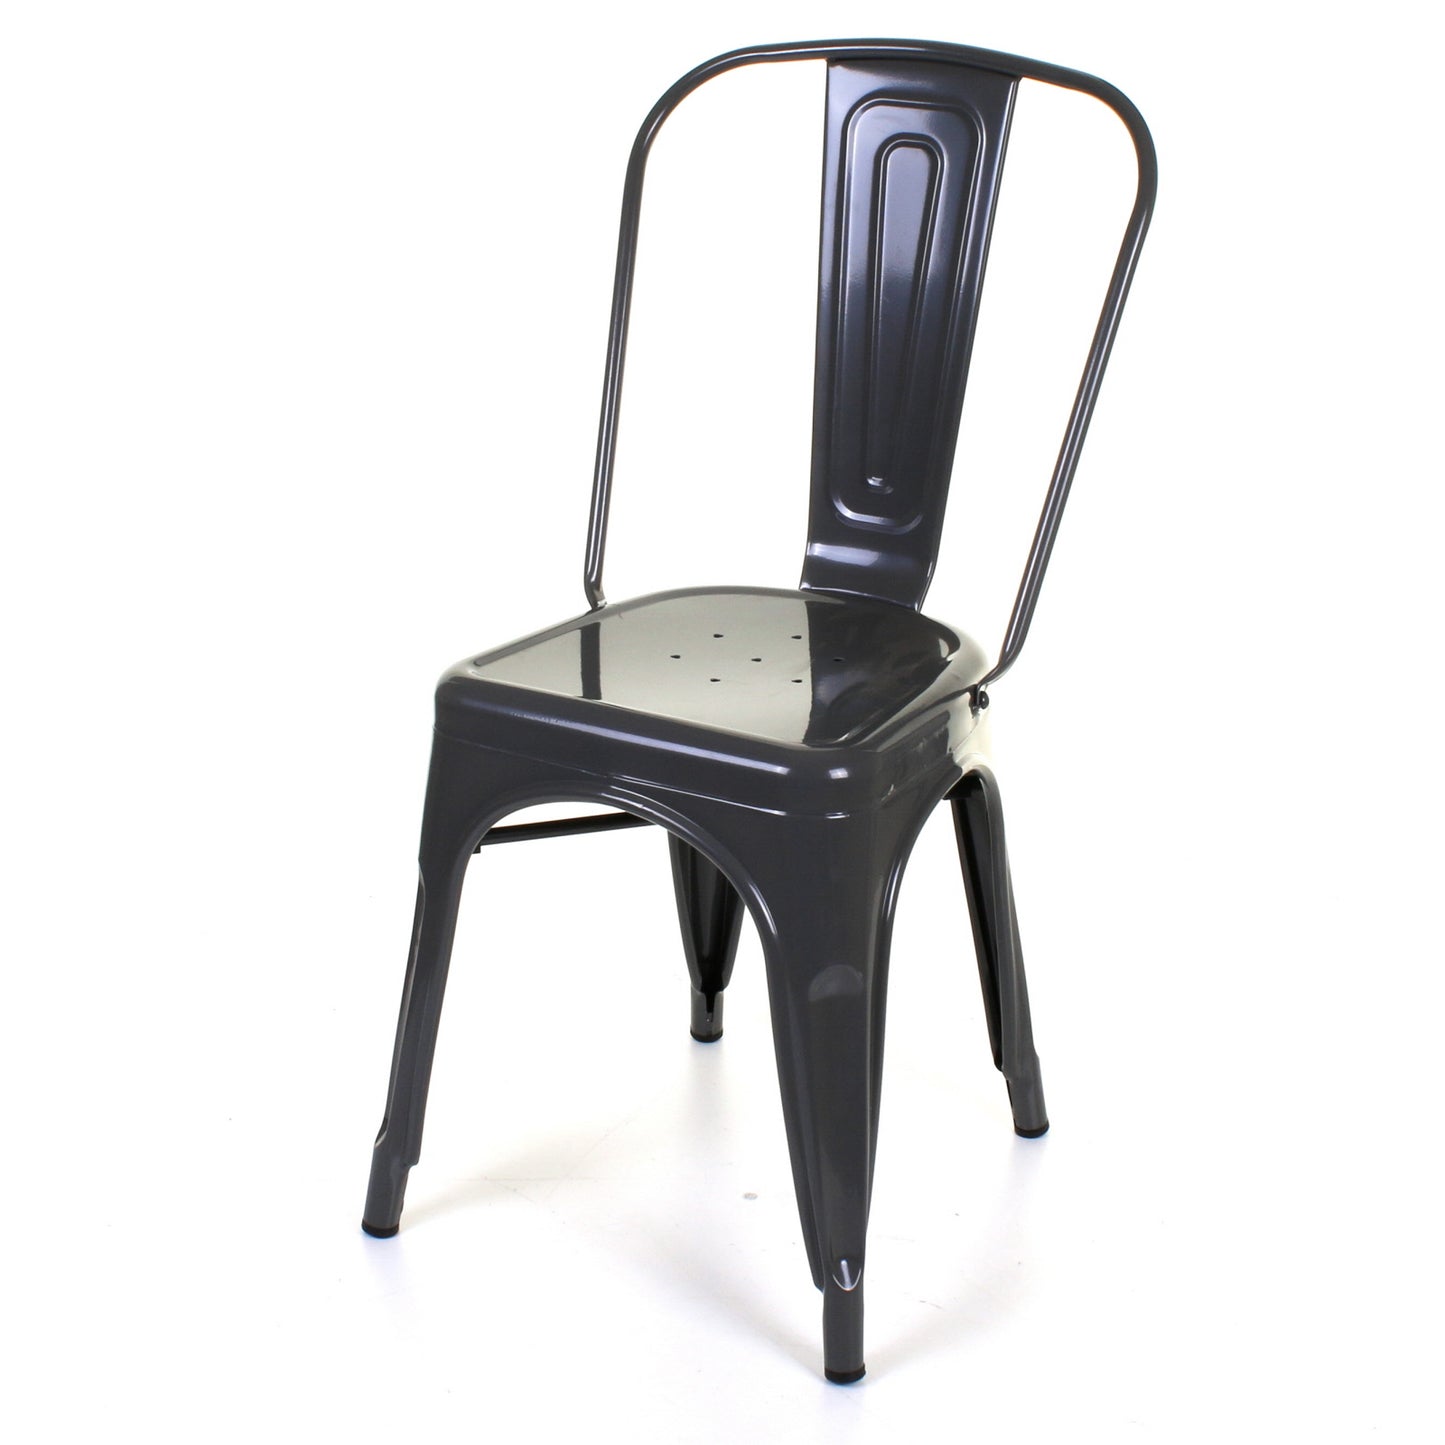 5PC Prato Table, 2 Siena Chairs & 2 Castel Stools Set - Graphite Grey